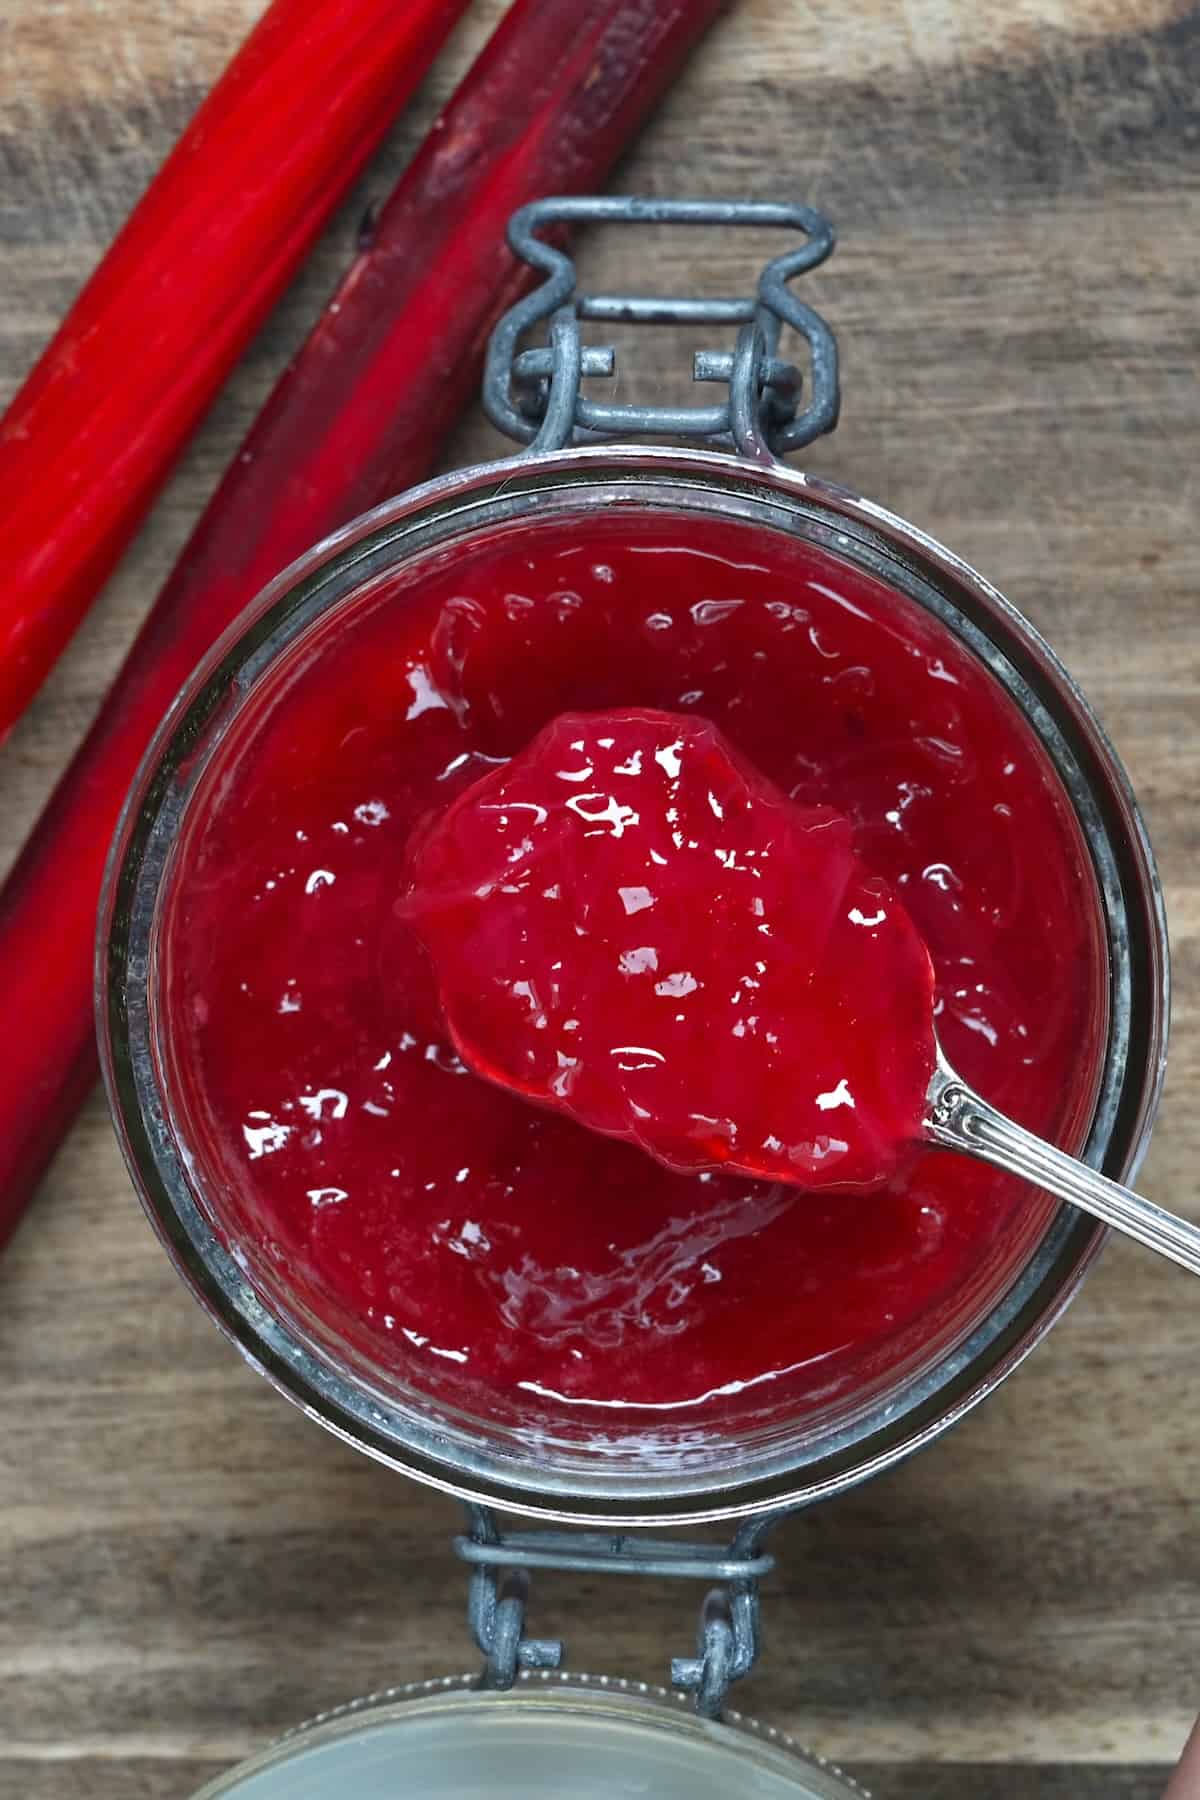 A spoonful of rhubarb jam